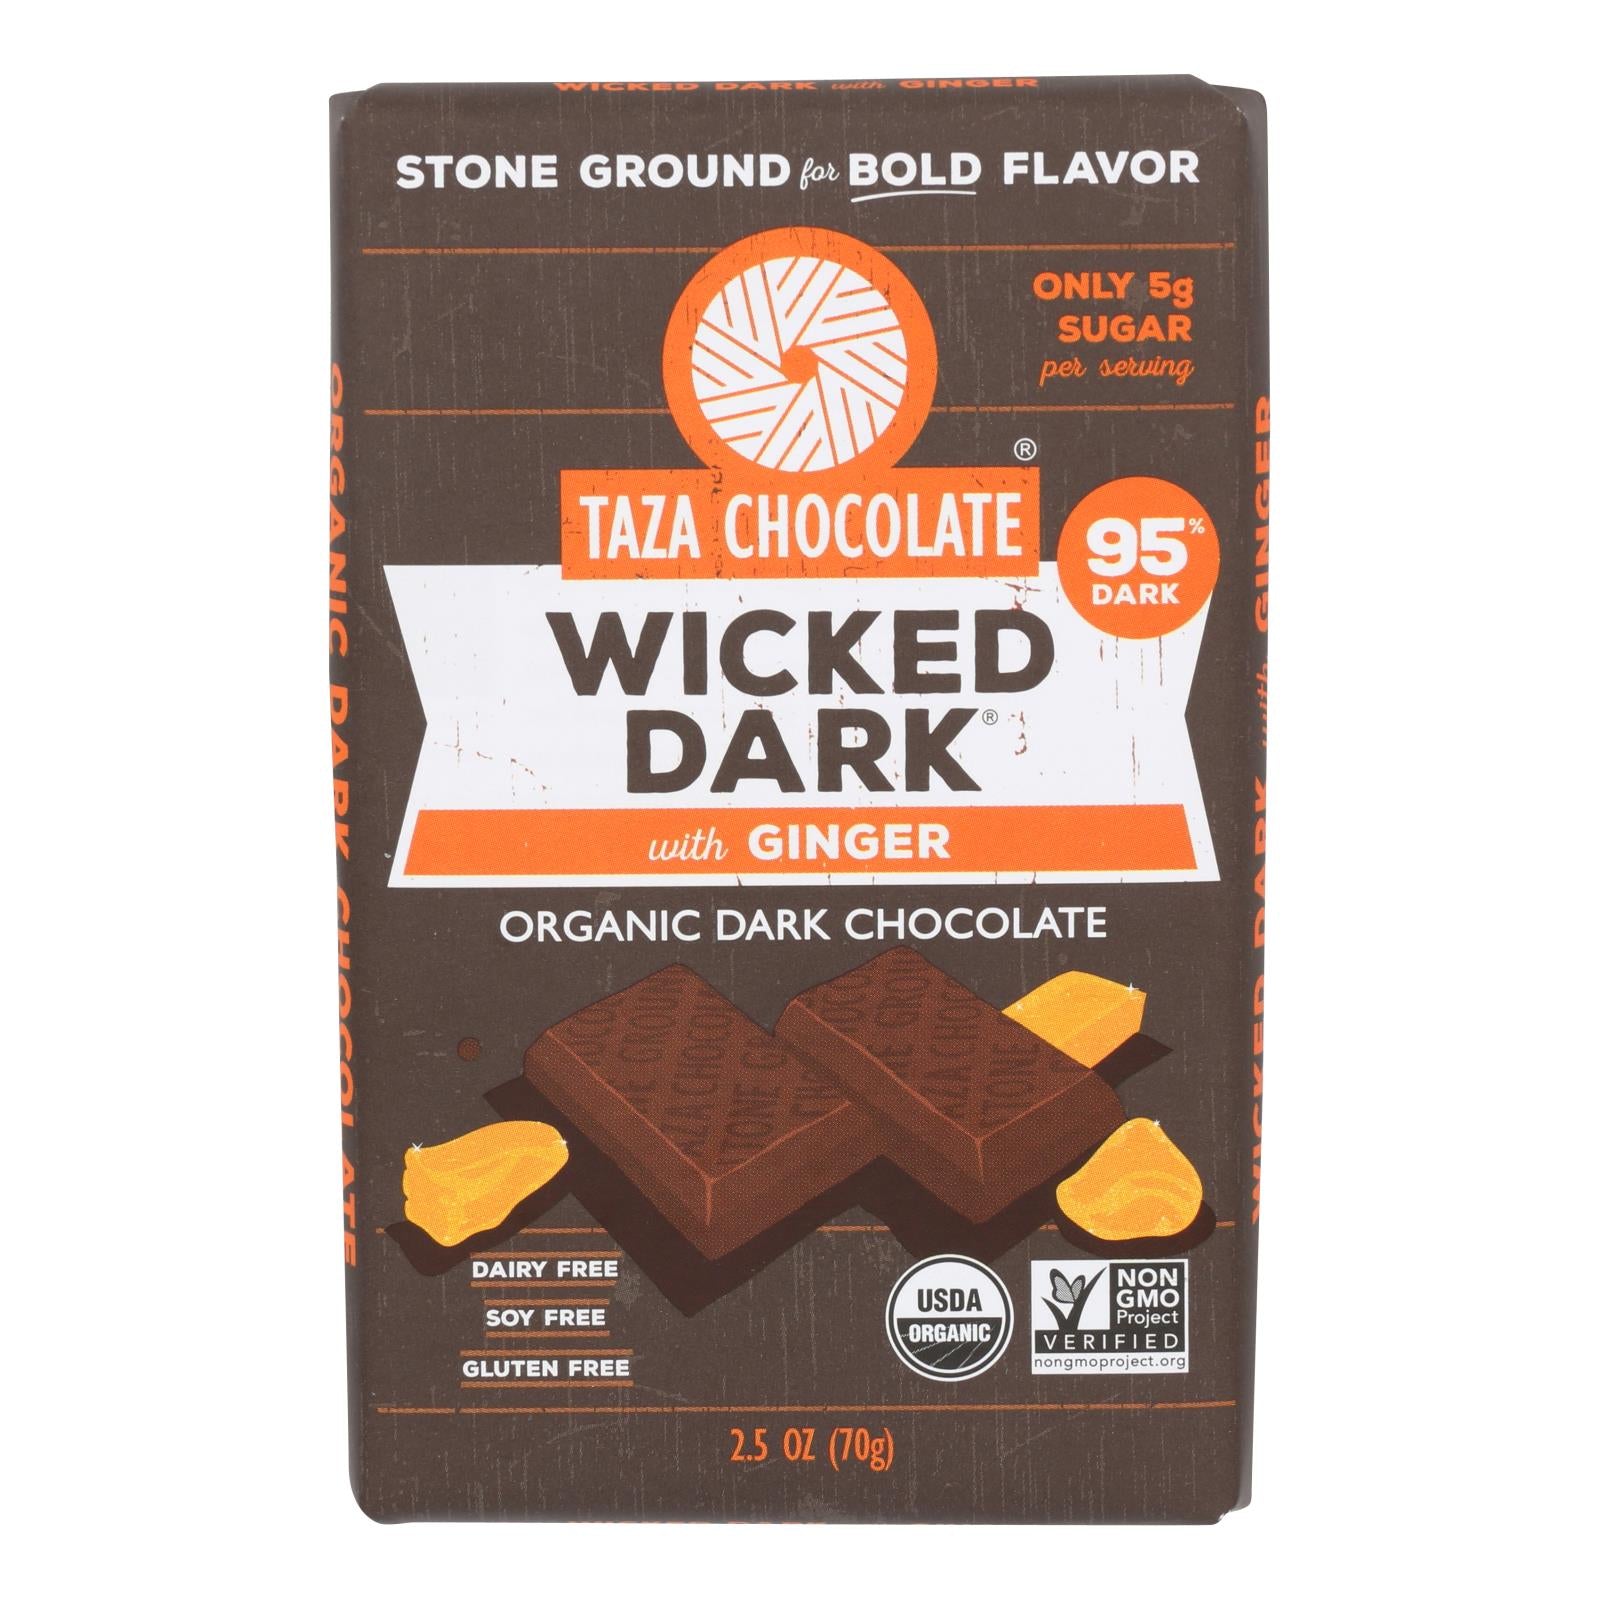 Taza Chocolate - Bar Wckd Dark Ginger 95% - Case Of 10 - 2.5 Oz - Whole Green Foods